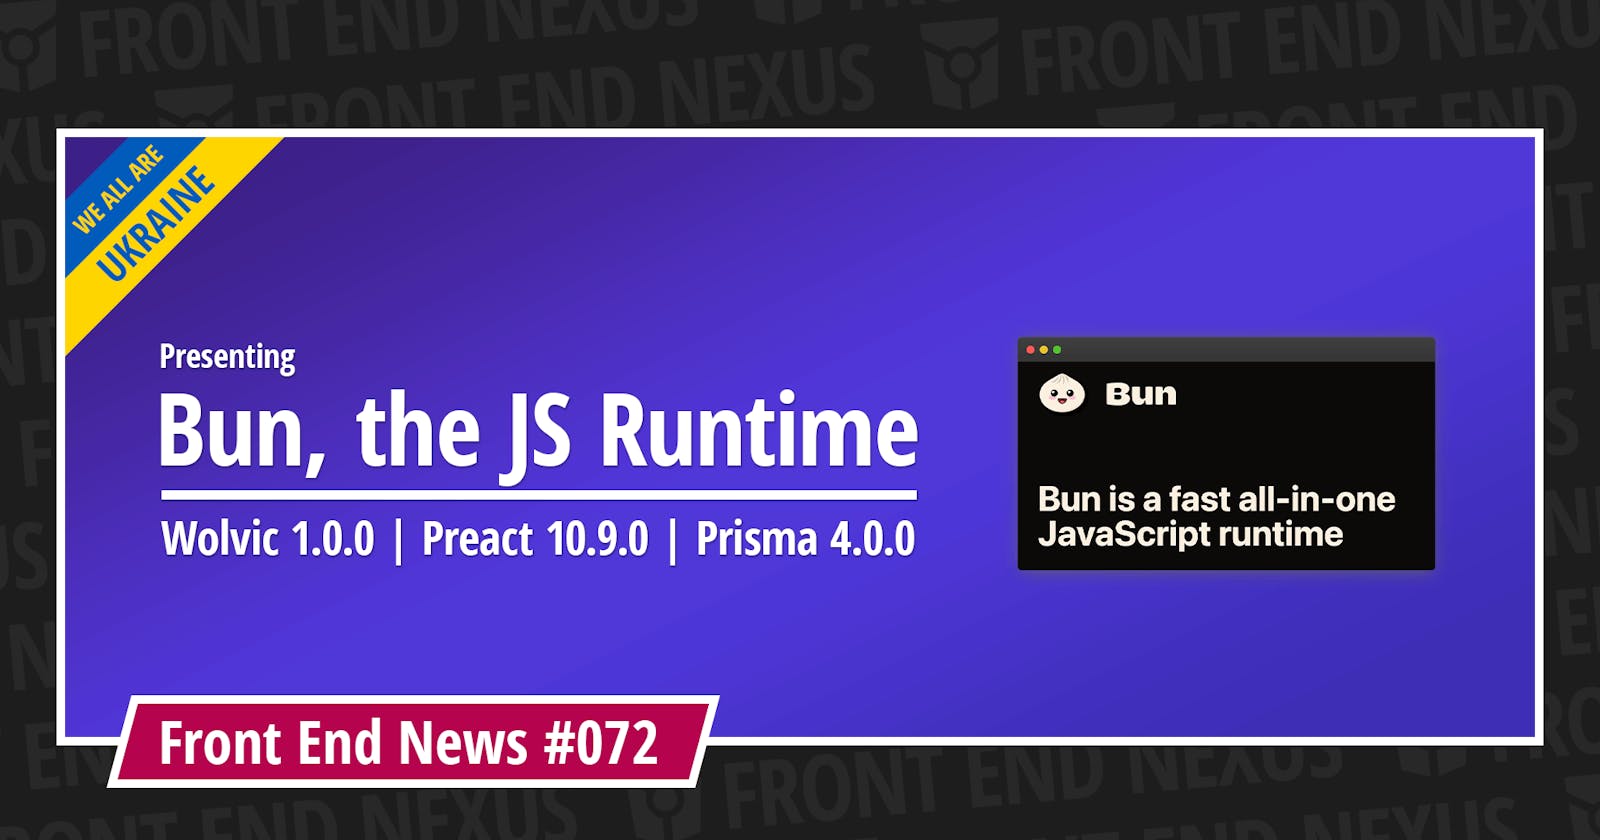 Introducing Bun, Wolvic 1.0, Preact 10.9.0, Prisma 4.0.0, and more | Front End News #072